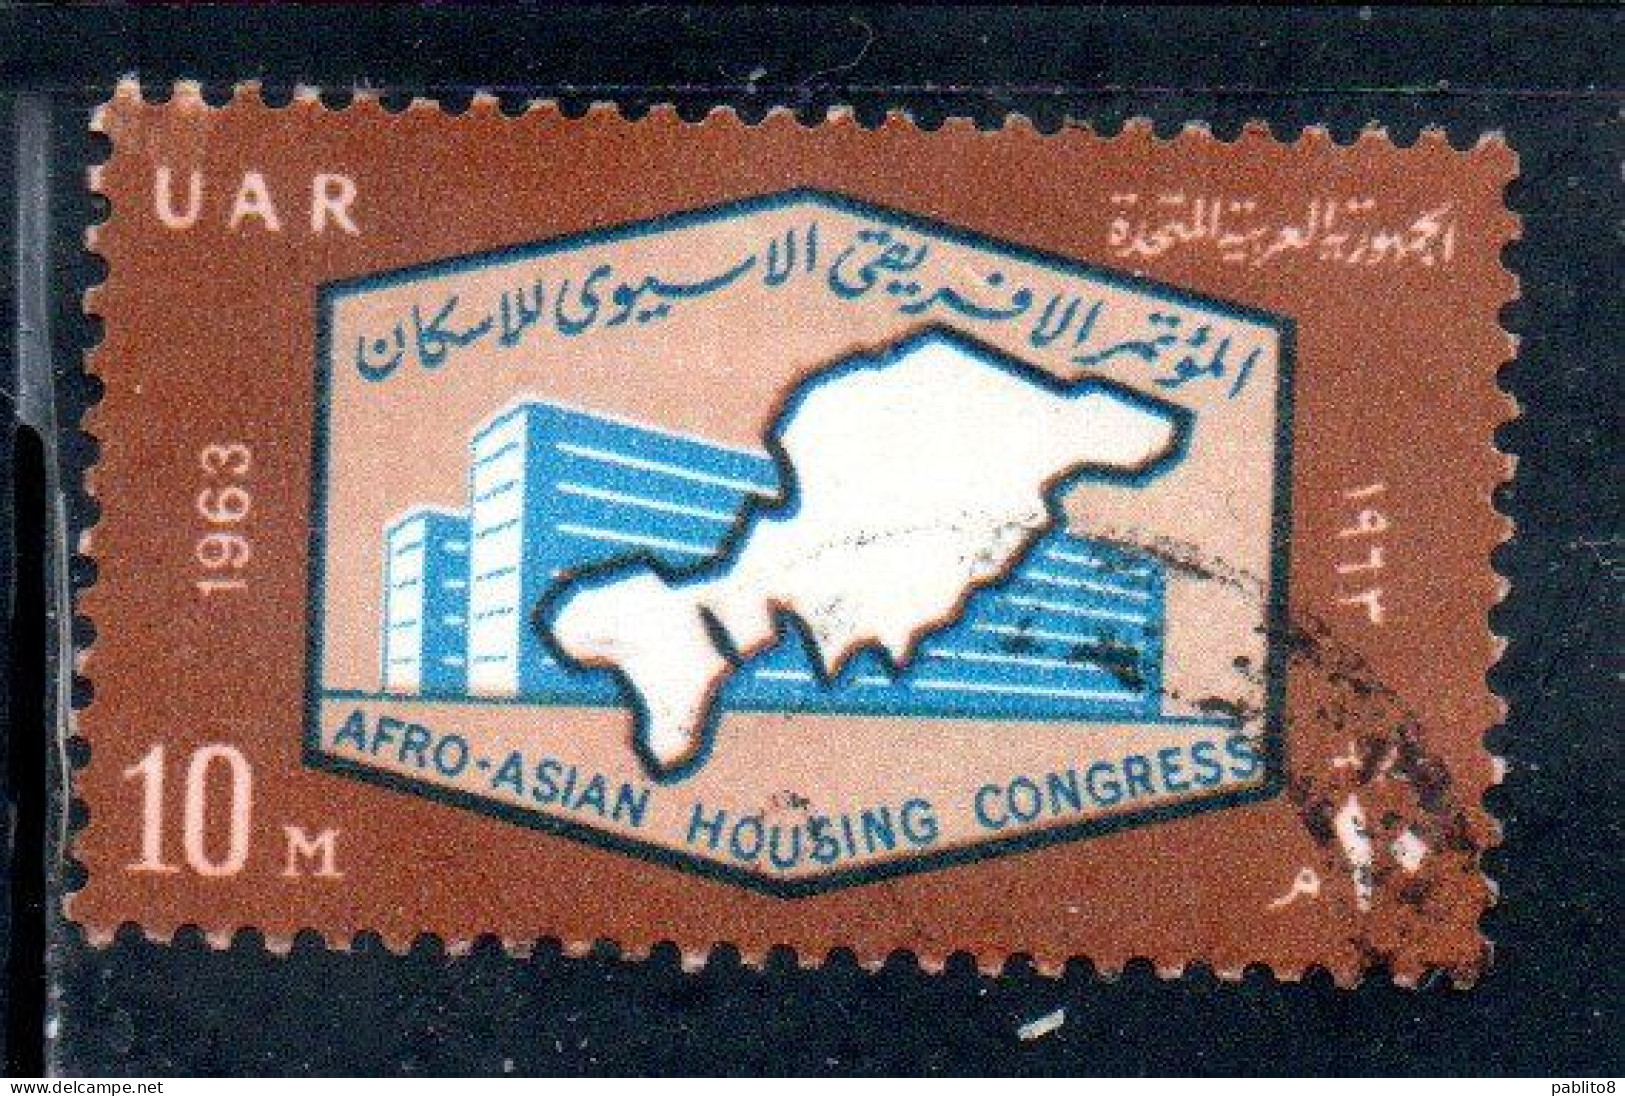 UAR EGYPT EGITTO 1963 AFRO-ASIAN HOUSING CONGRESS MODERN BUILDING AND MAP 10m  USED USATO OBLITERE' - Usati